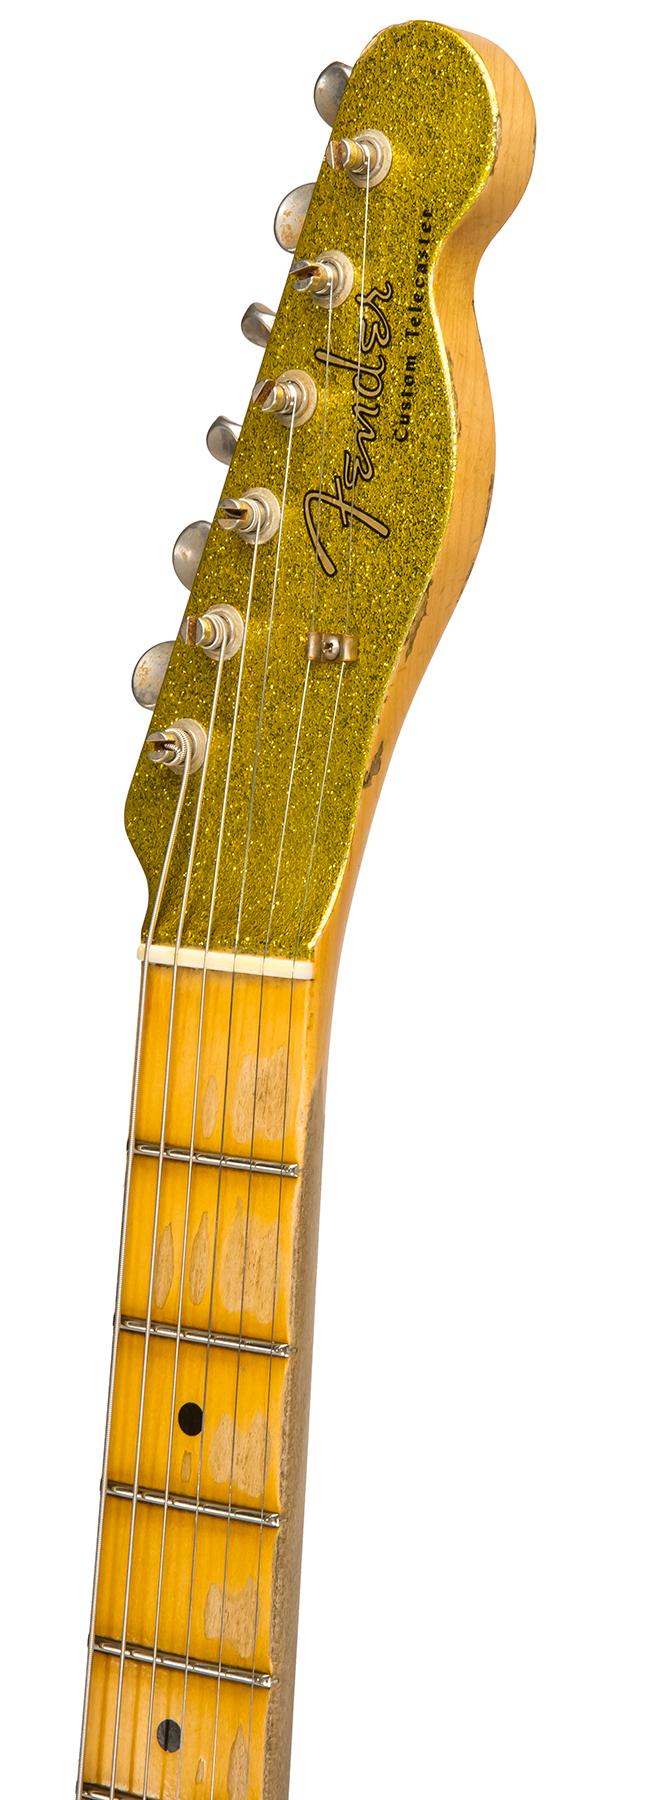 Fender Custom Shop Tele Custom 1963 2020 Ltd Rw #cz545983 - Relic Chartreuse Sparkle - Televorm elektrische gitaar - Variation 4